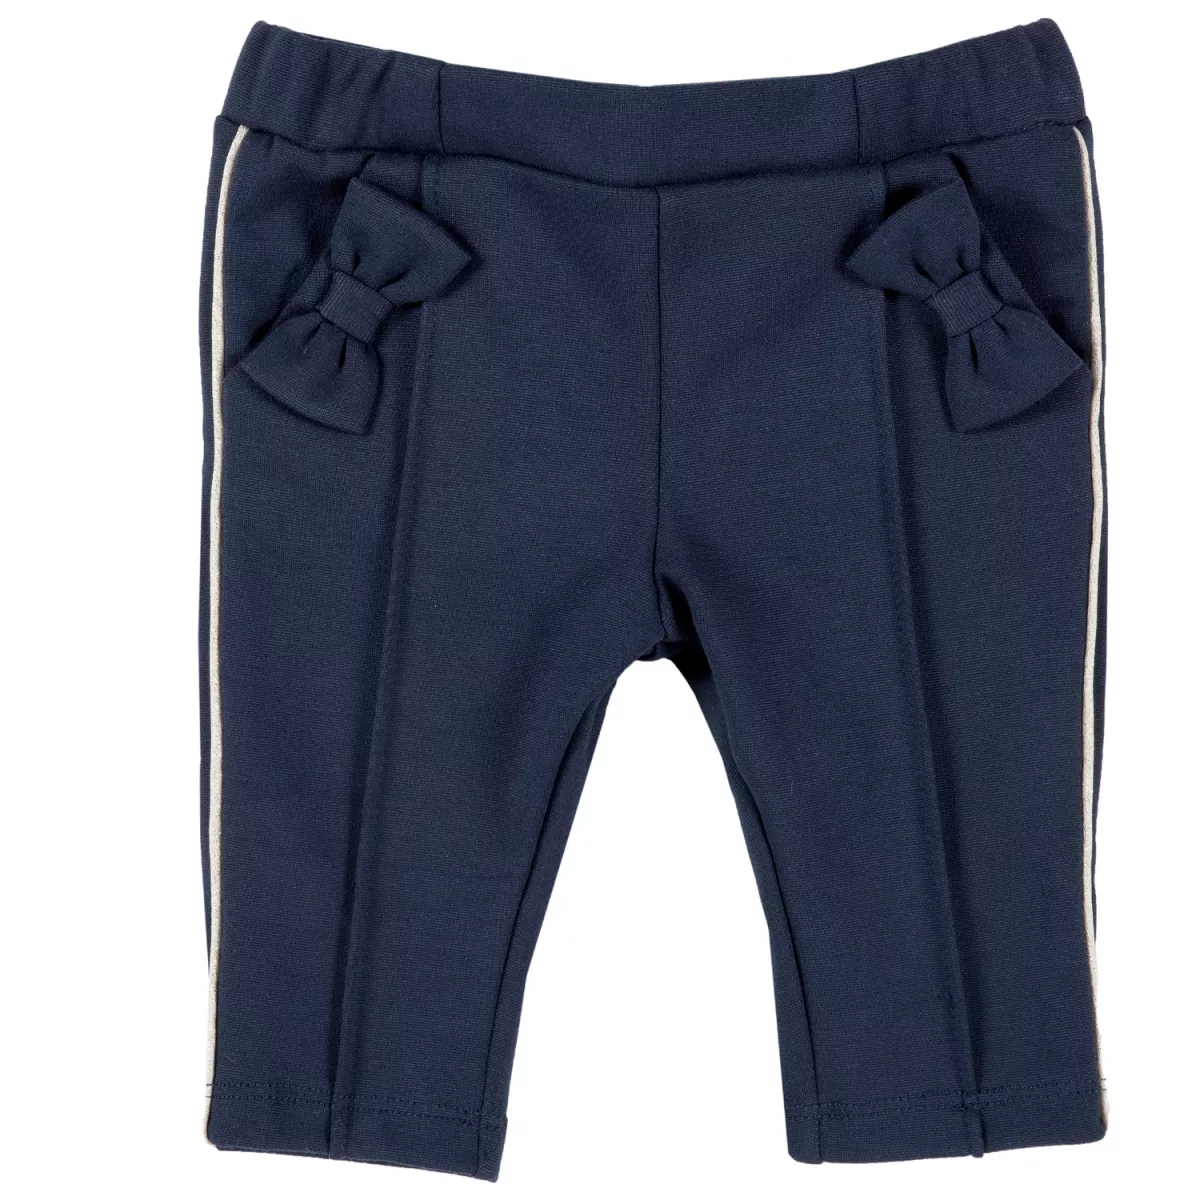 Pantalon copii Chicco, albastru inchis, 62